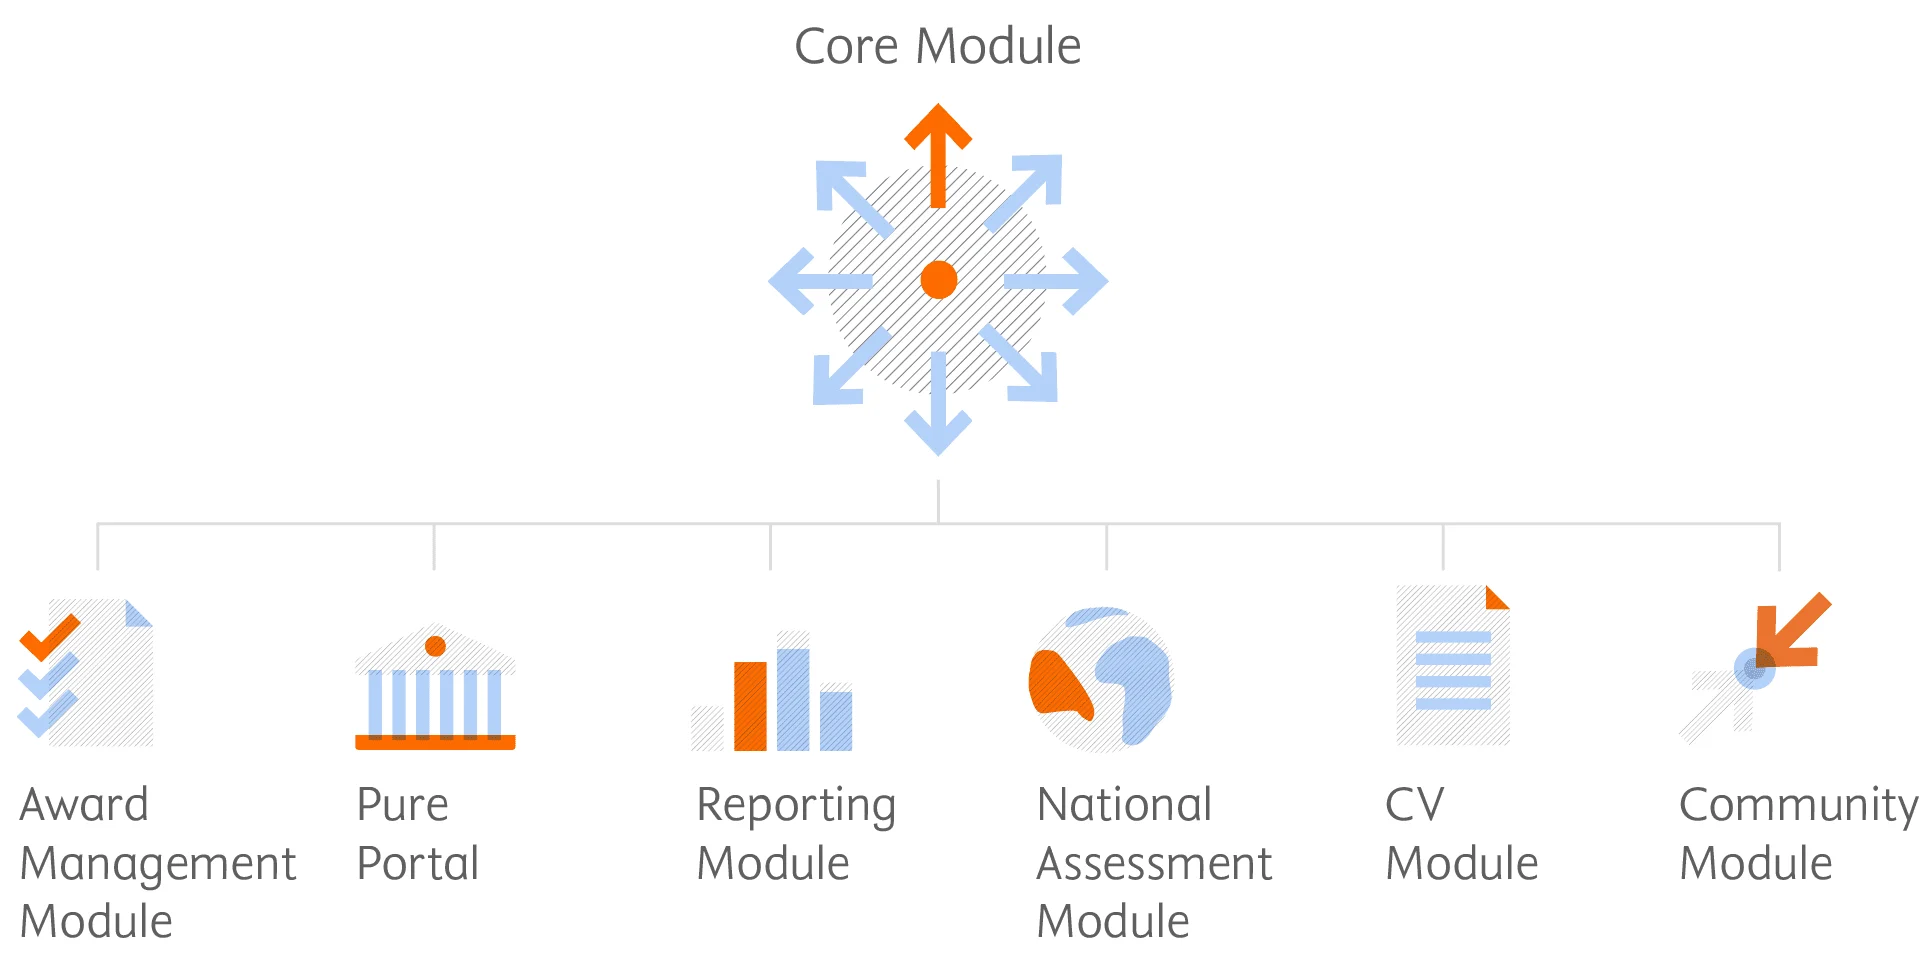 Schematic presentation of the Pure modules: Core Module overarching the Award Management Module, Pure Portal, Reporting Module, National Assessment Module, CV Module,  and Community Module